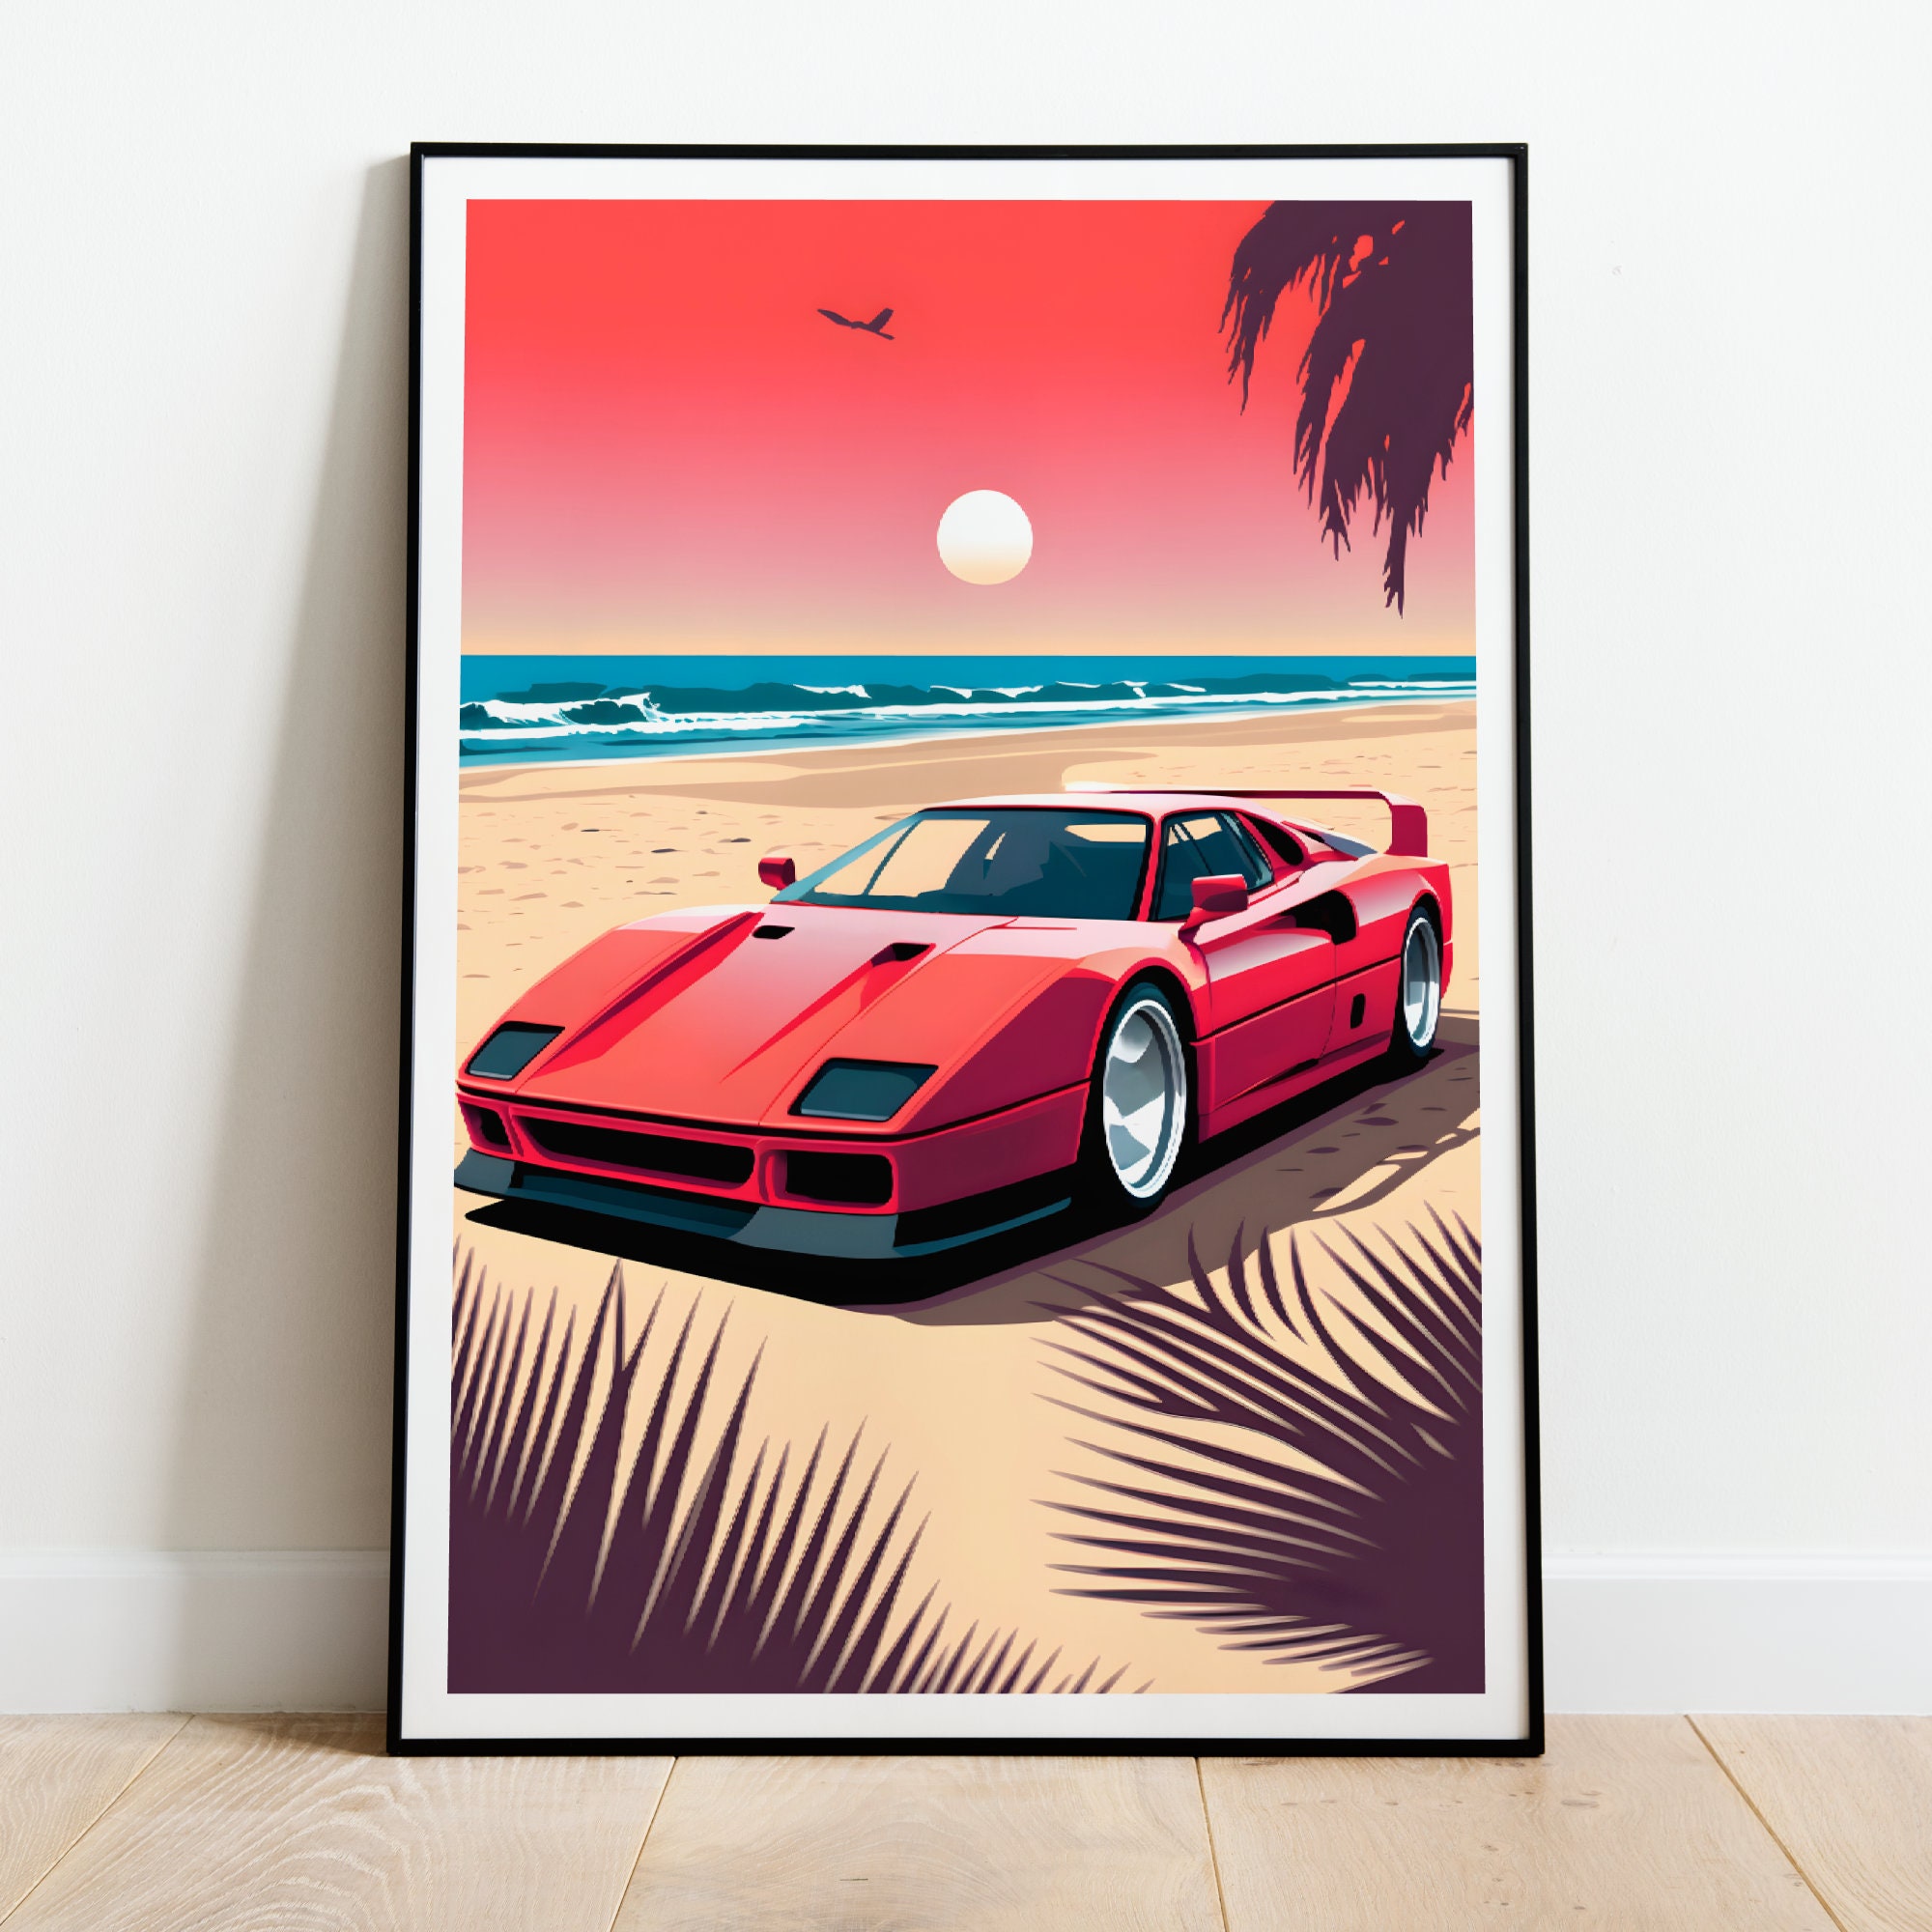 Ferrari Poster, Ferrari F40 Poster, Car Posters, Ferrari F40. 50 x 70cm  (18 x 24). Car Posters for Boys. Wall Art for your son, F40 Poster